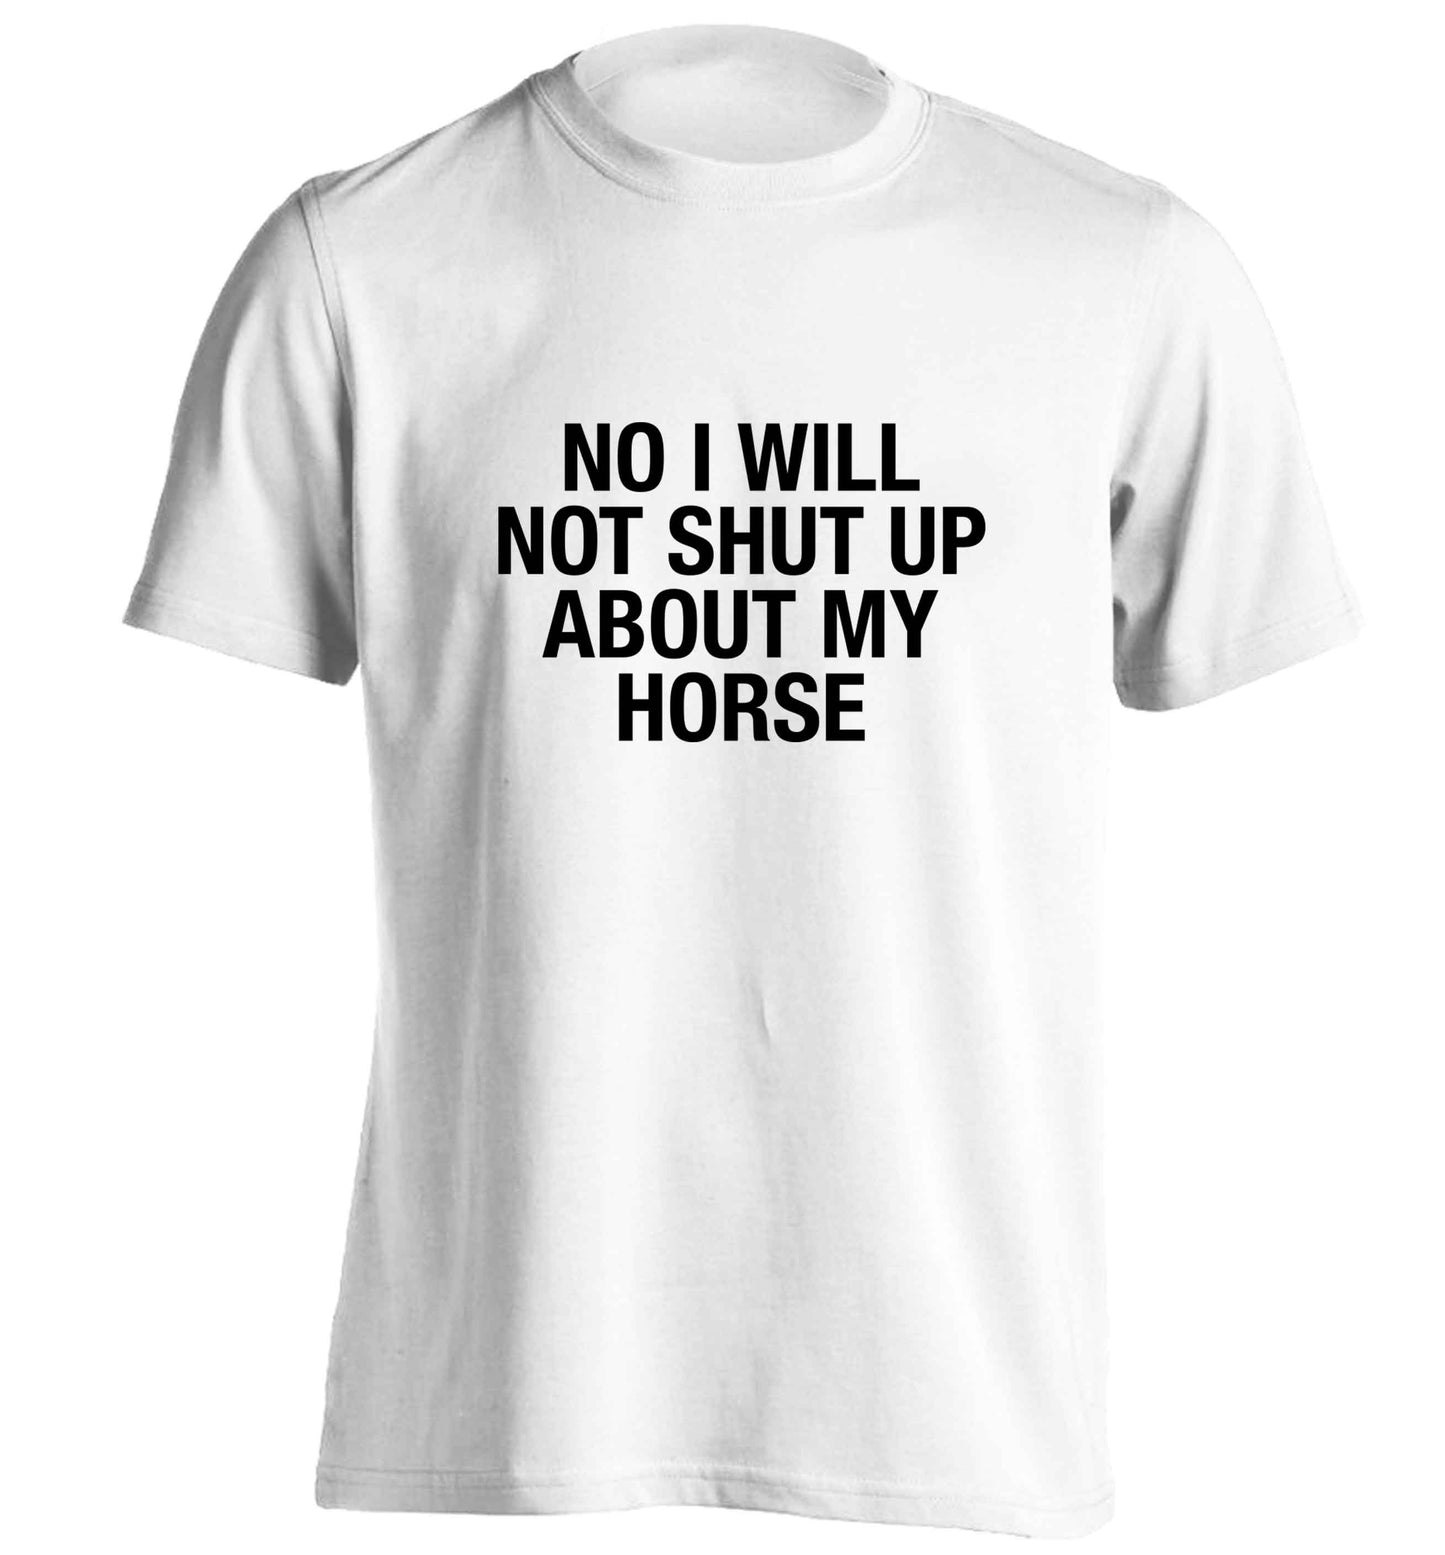 Warning may start talking about horses adults unisex white Tshirt 2XL